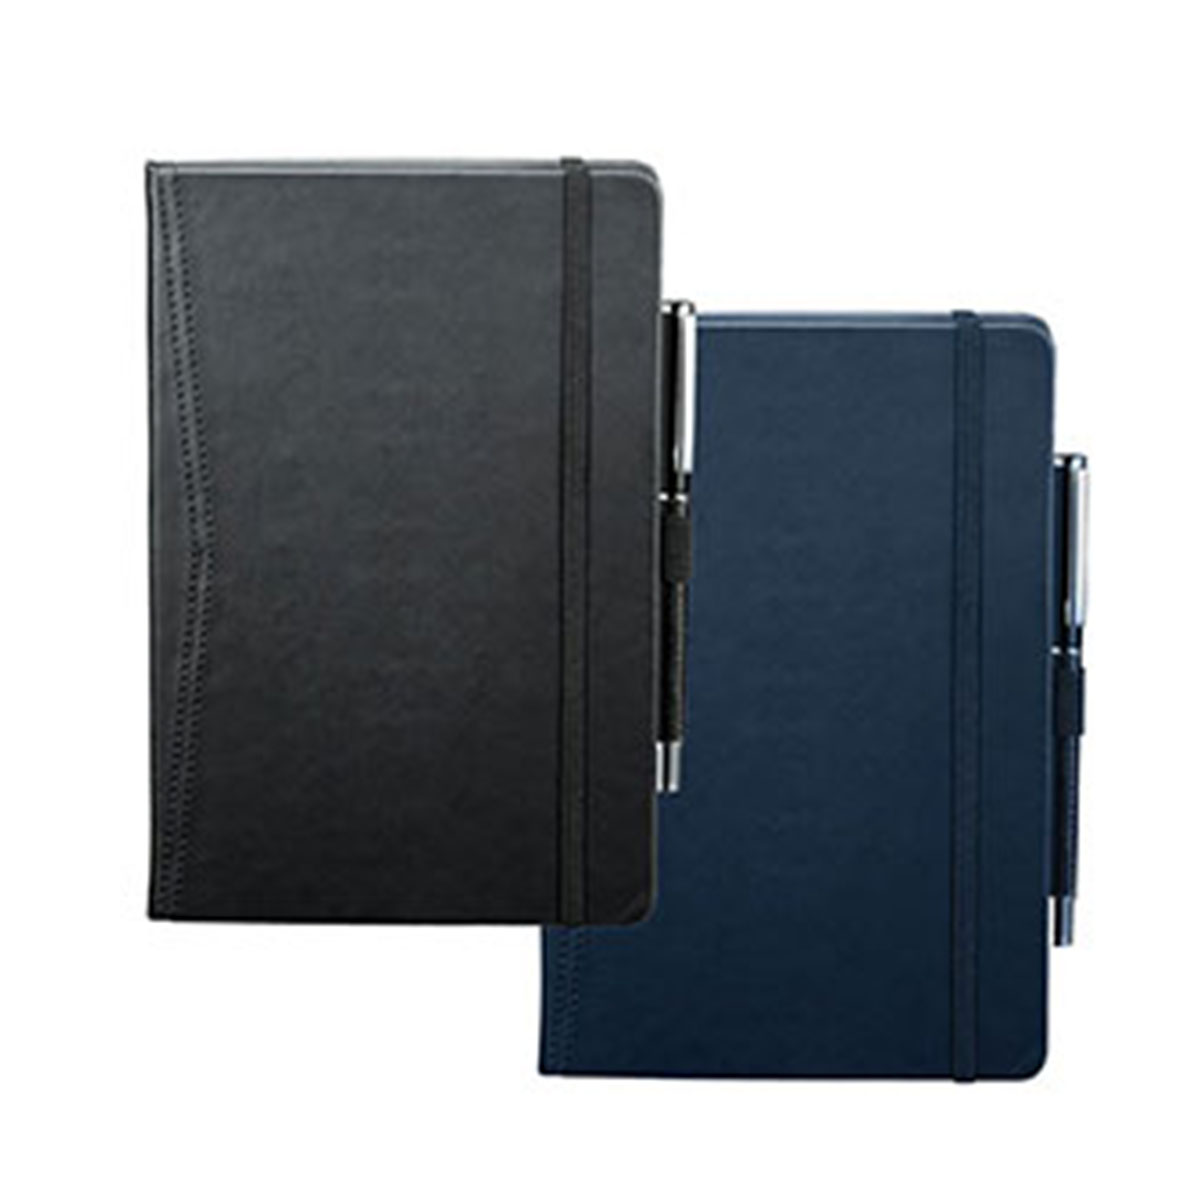 Pedova Pocket Bound JournalBook-Blue with blue elastic.